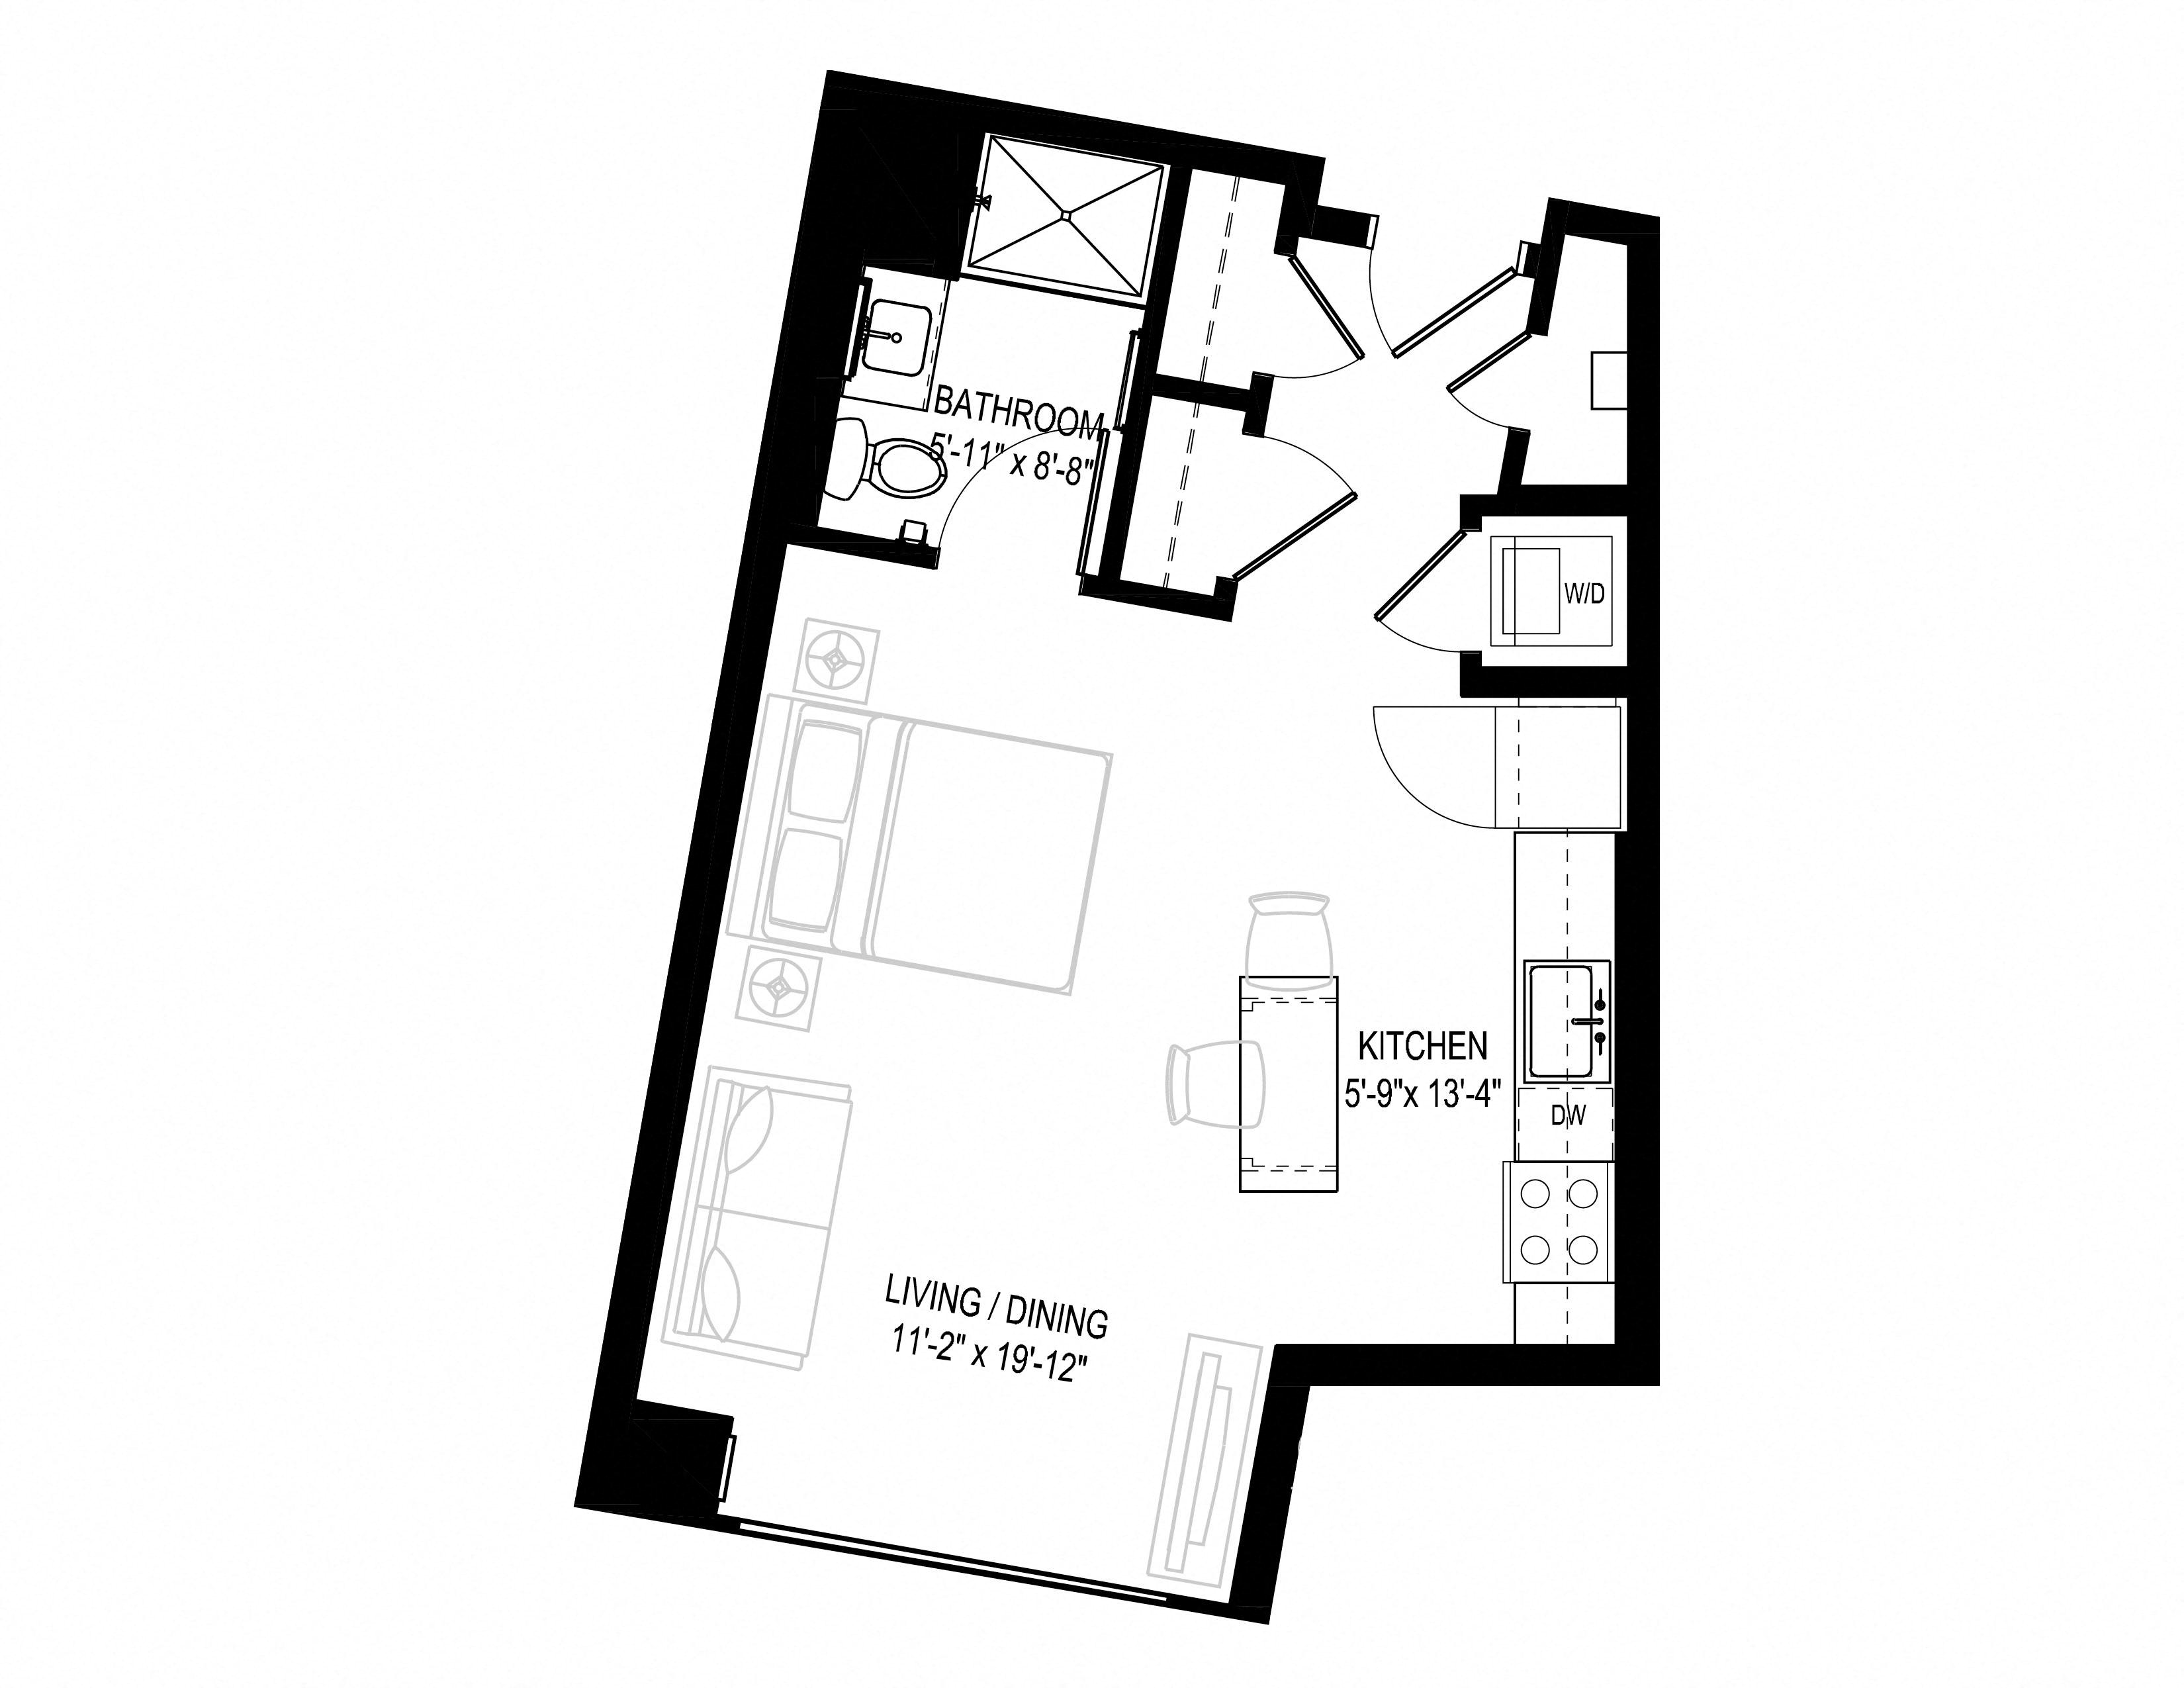 Floorplan image of 1-522